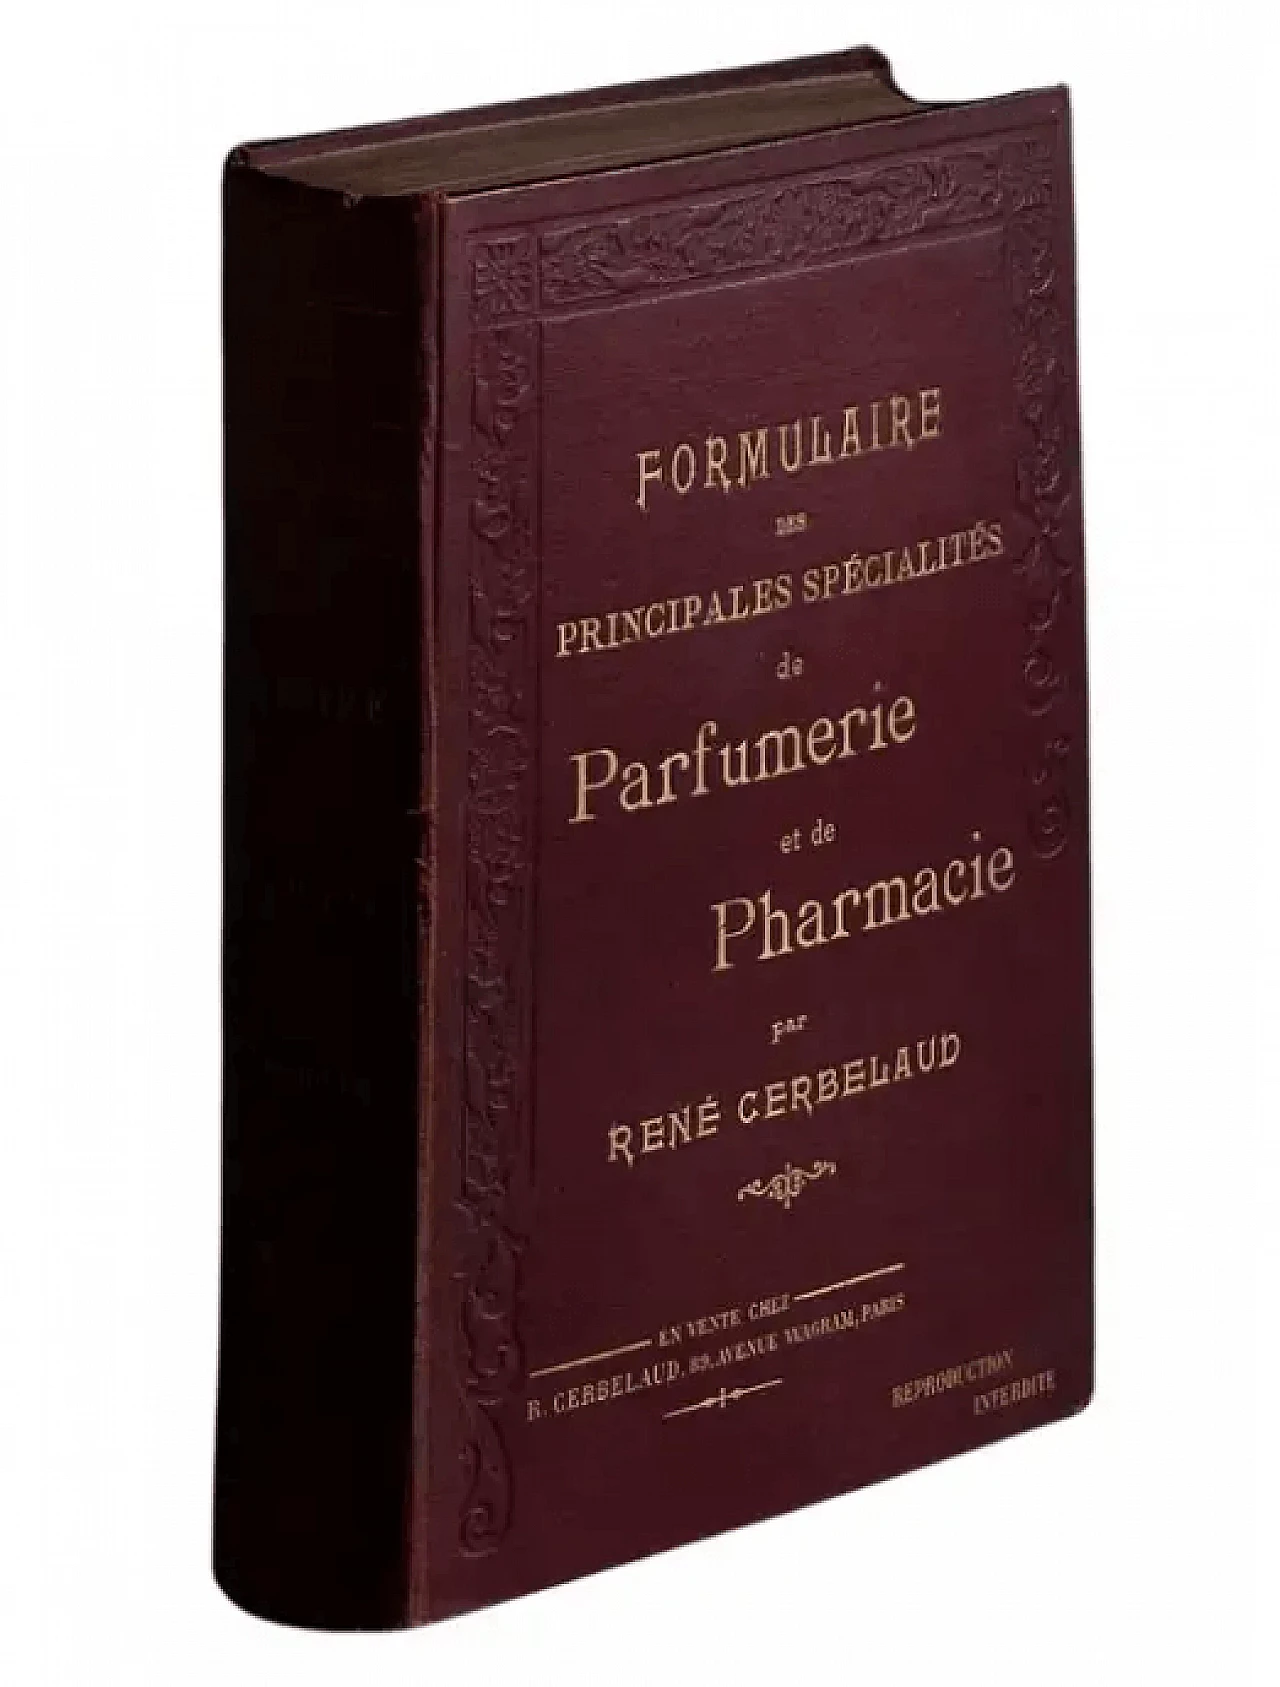 Perfumery and pharmacy book by René Cerbelaud, early 20th century 1